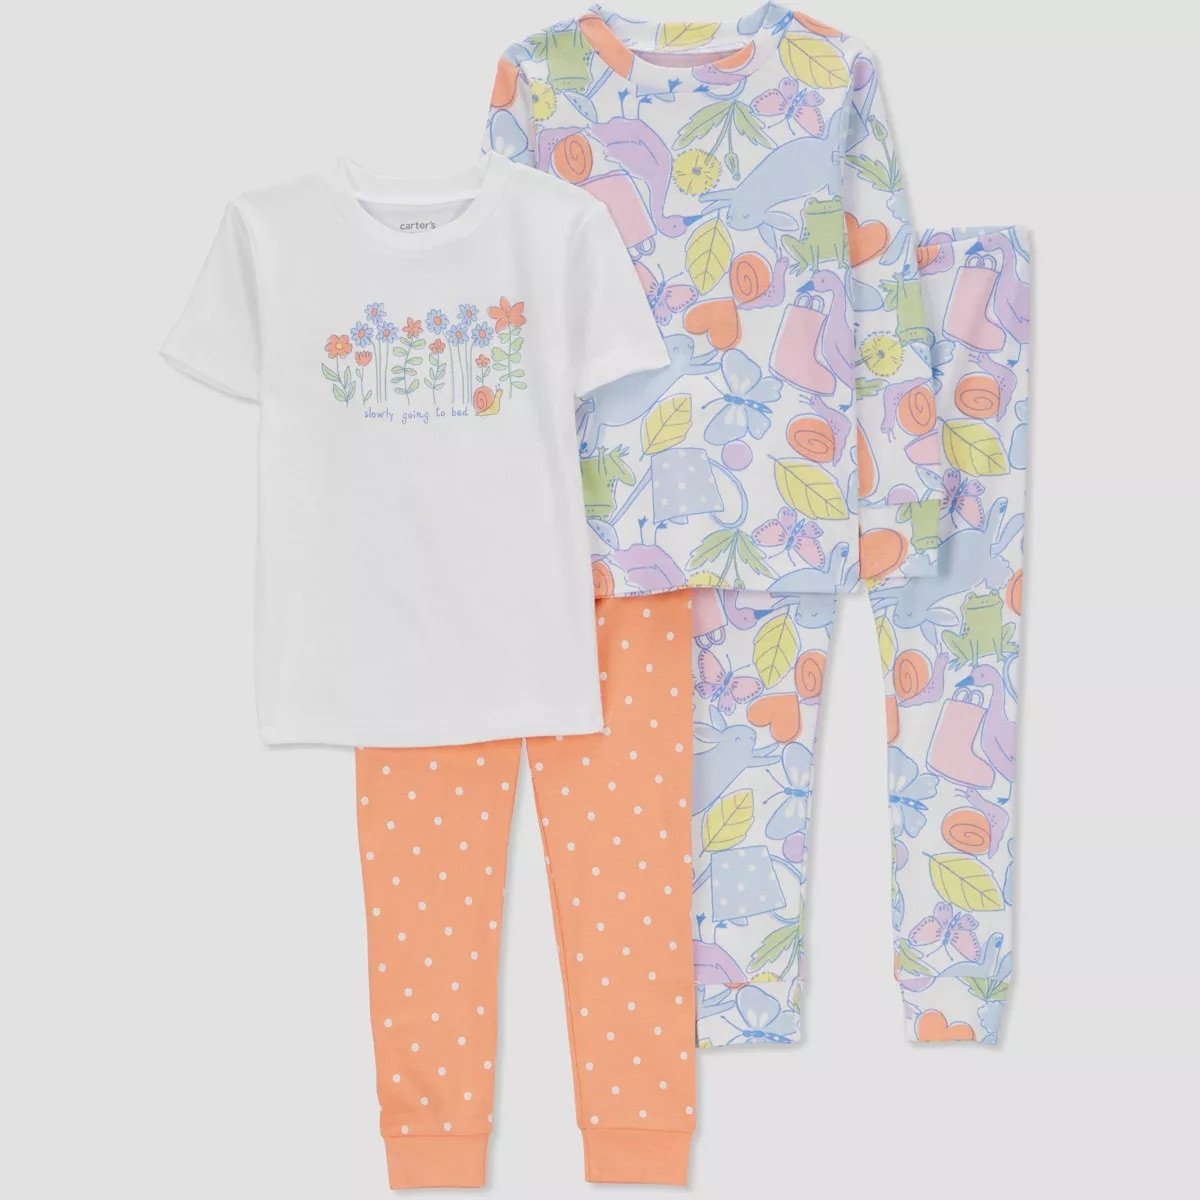 Carters Just One You Toddler Girls Polka Dots Floral Printed Pajama Set.jpeg